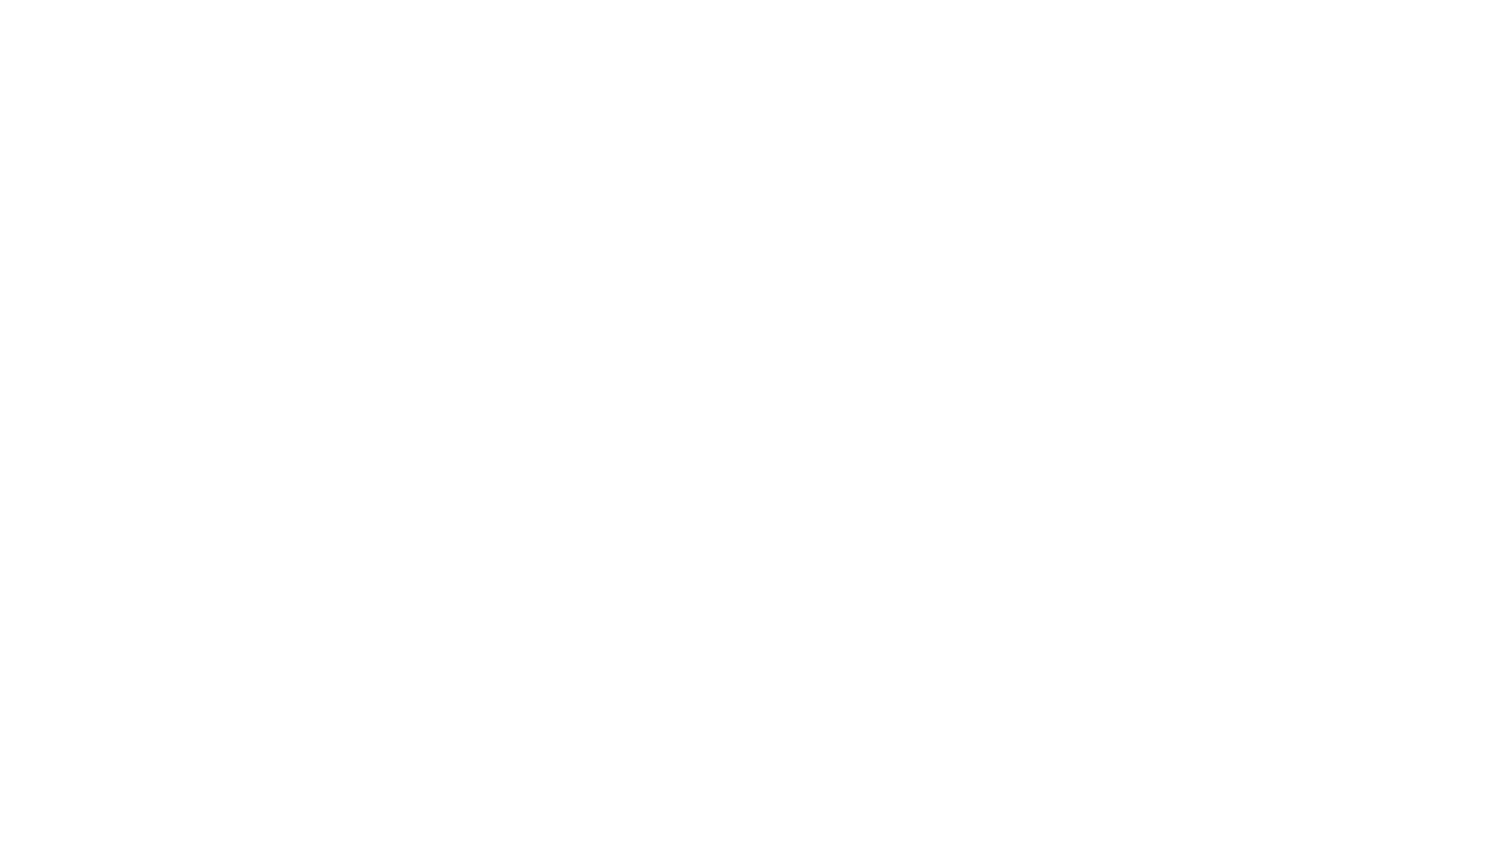 TENNIS COACH - JAKUB PITER